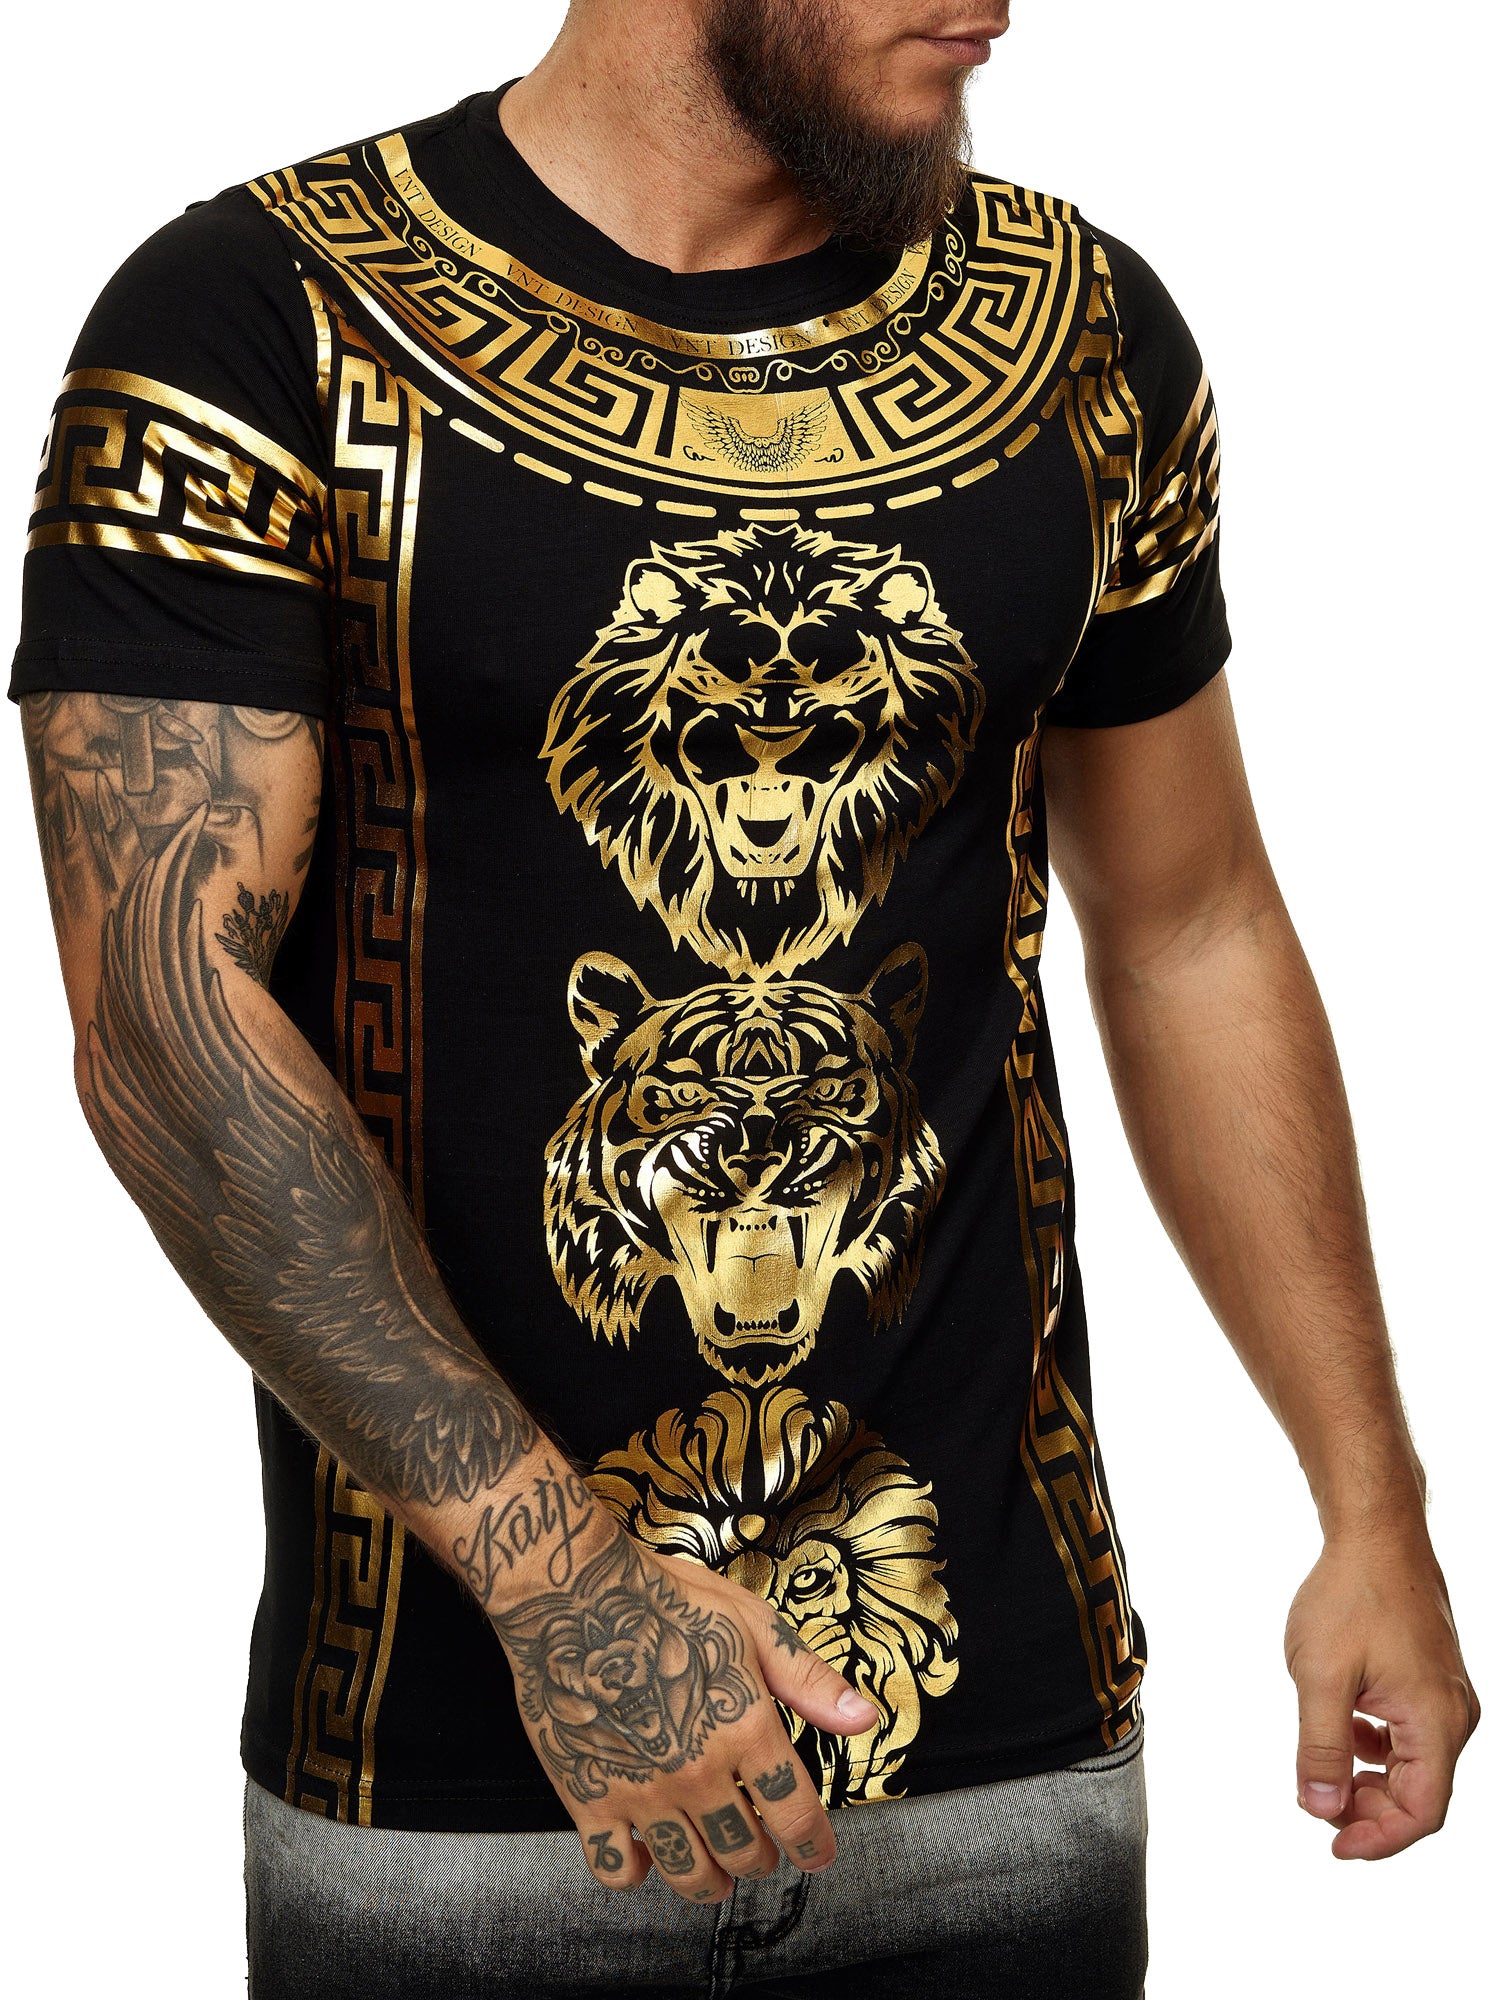 Falion Graphic T-Shirt - Black Gold ...